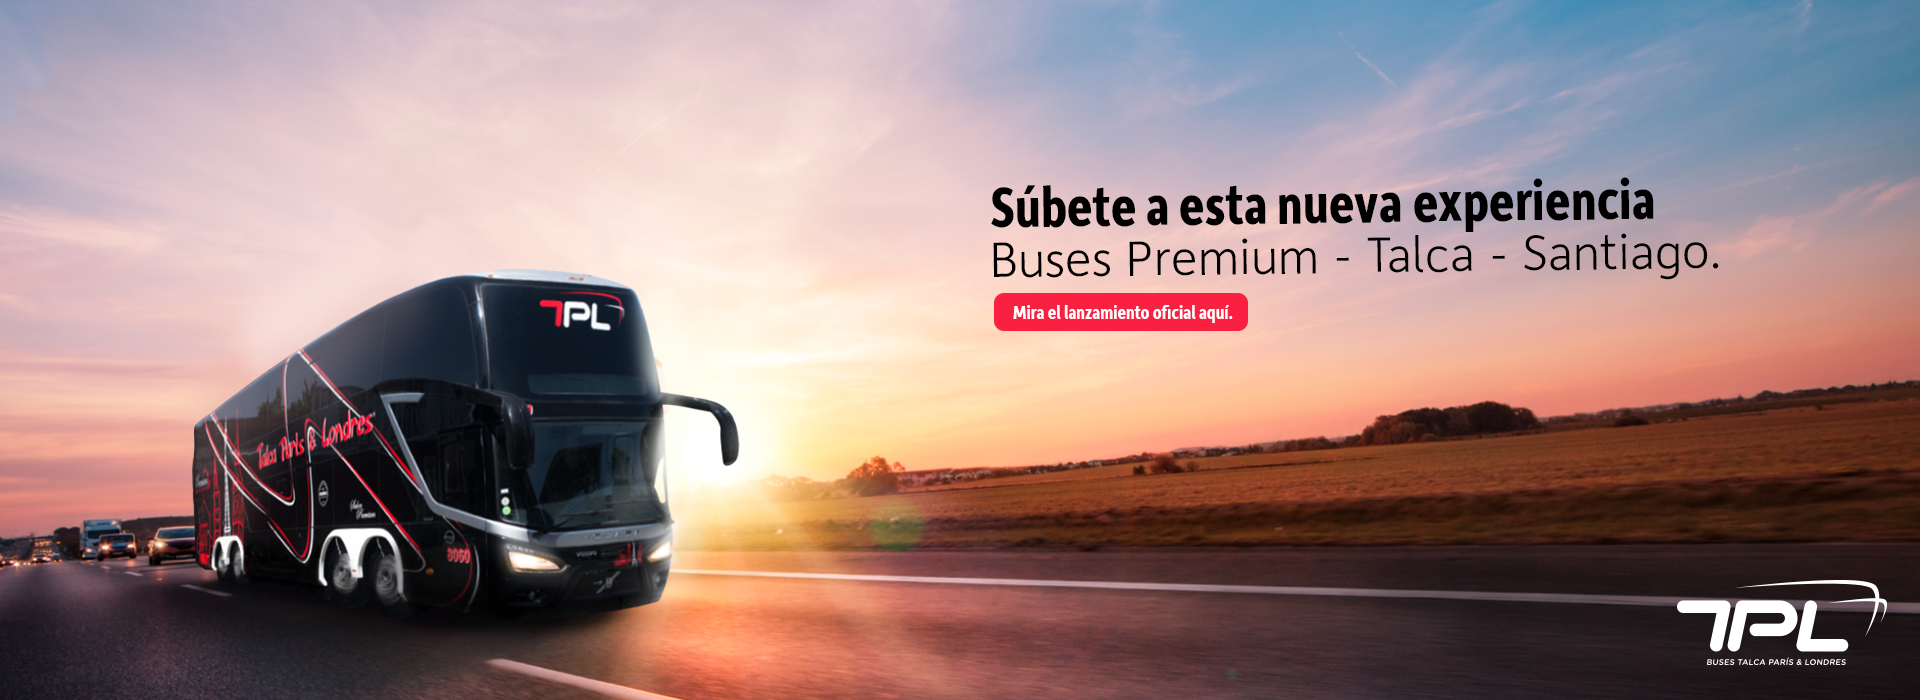 Buses-Premium-Banners-TPL